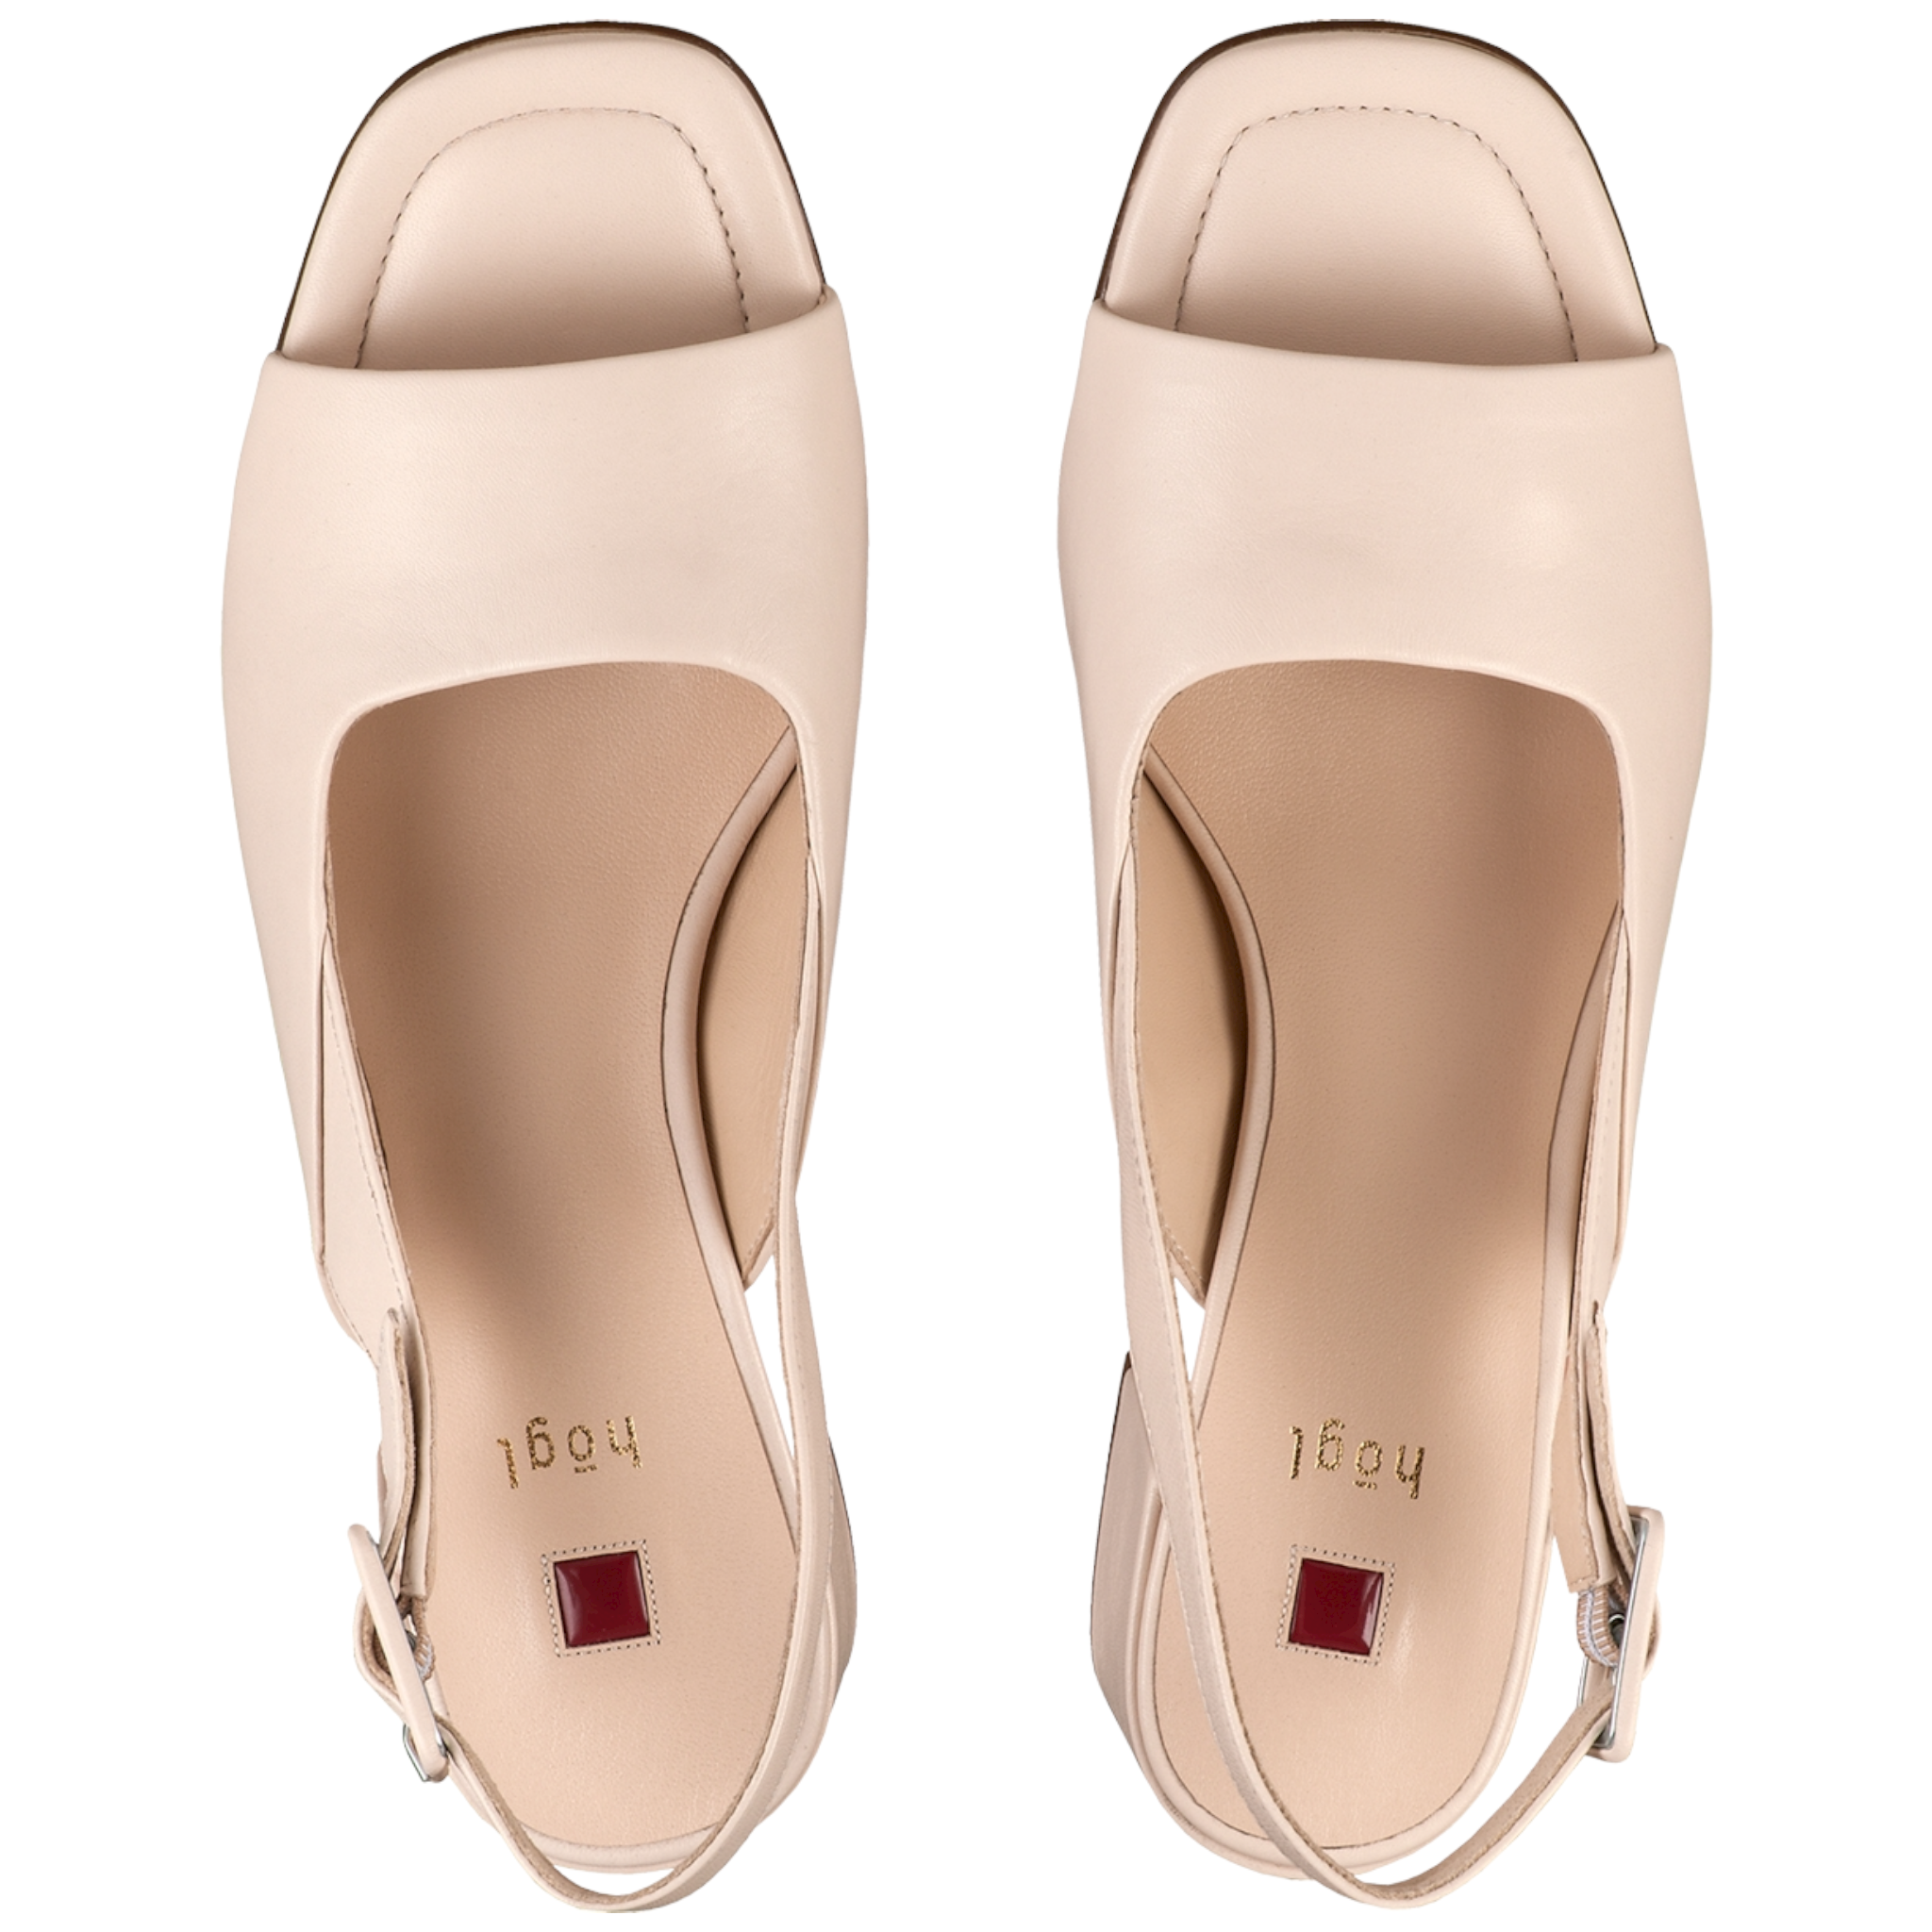 Hopper - shoe&me - Hogl - Heels - Heels, Sandal, Summer 22, Womens